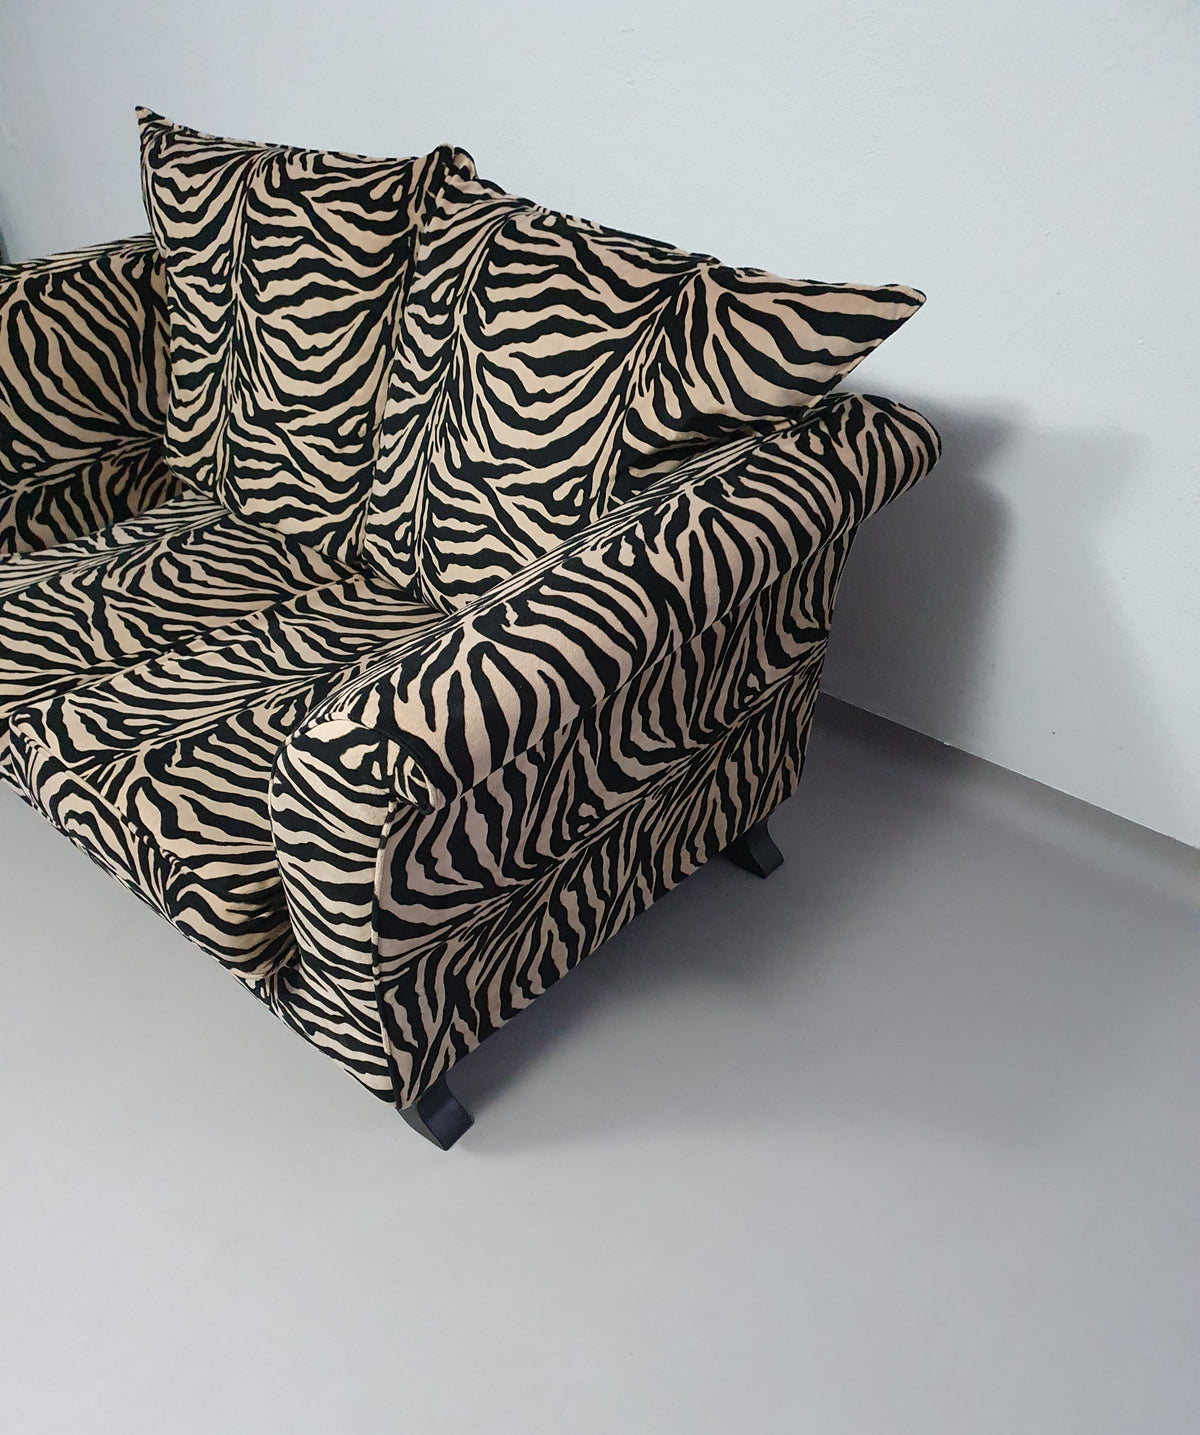 Weighty 80's zebra print sofa. Very good condition.